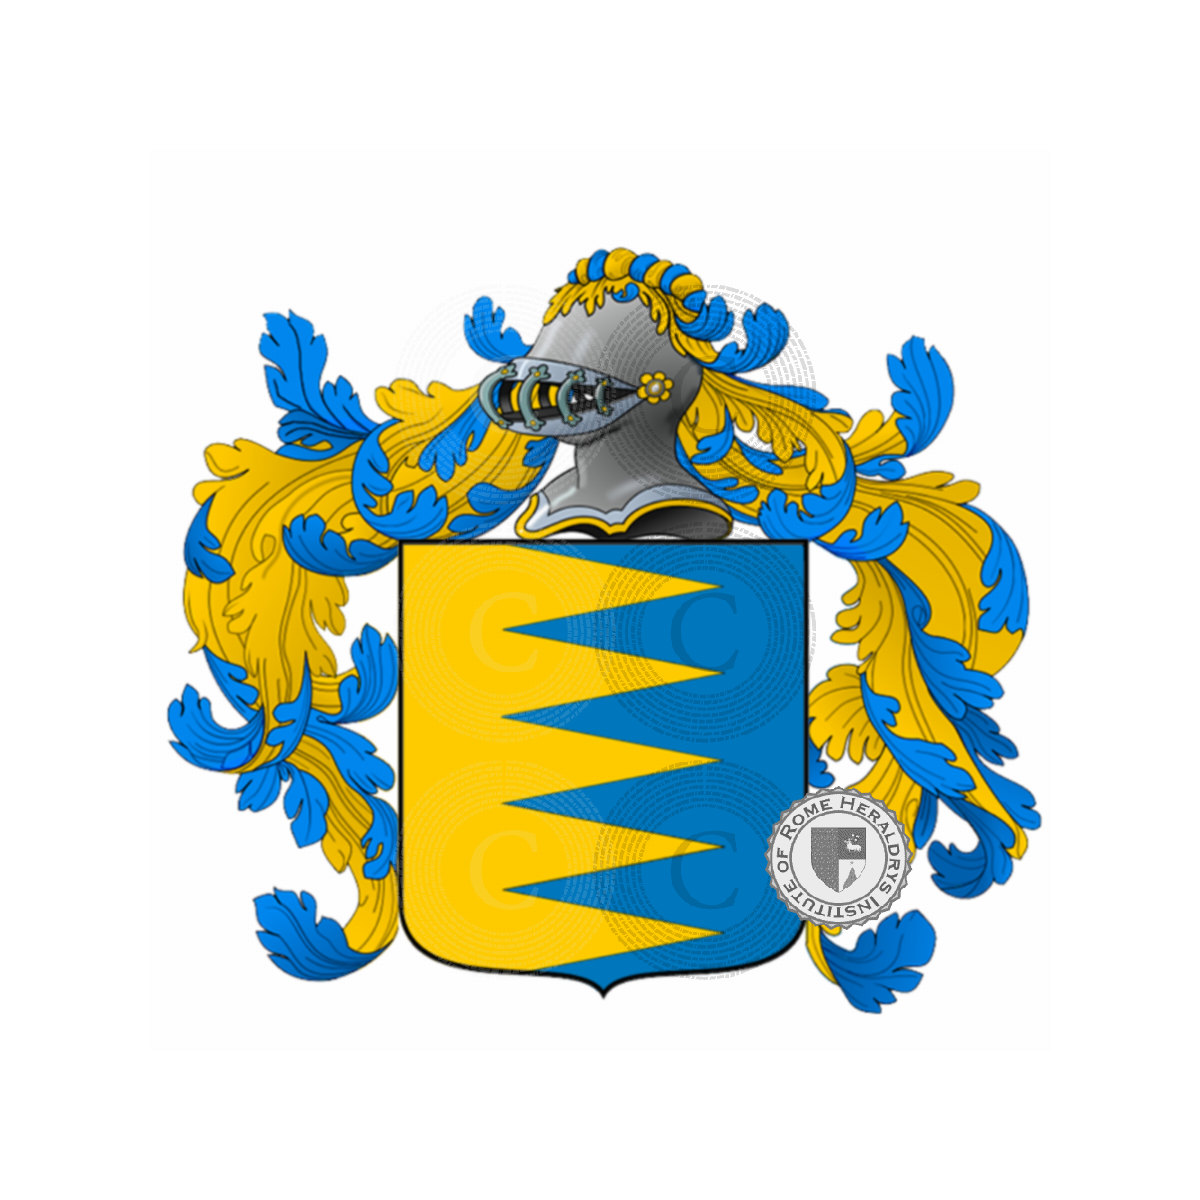 Coat of arms of familyPesaro